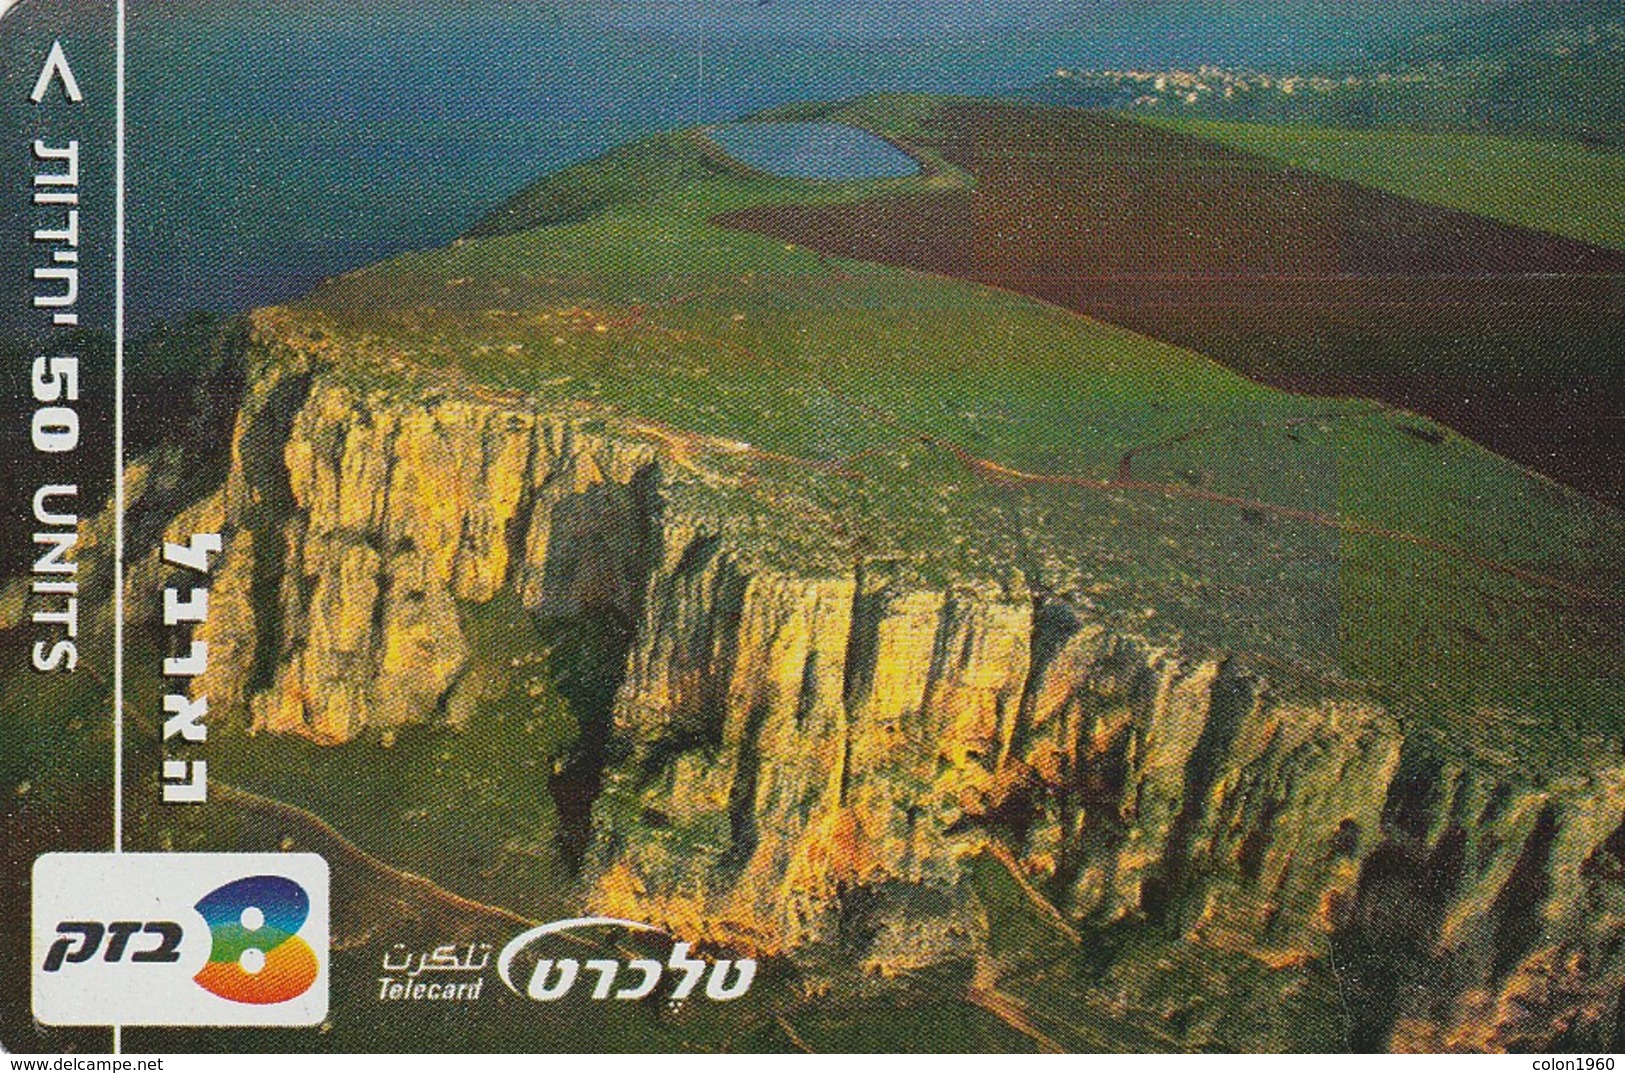 TARJETA TELEFONICA DE ISRAEL. Mount Arbel. 205K. BZ-332. (339). - Israel